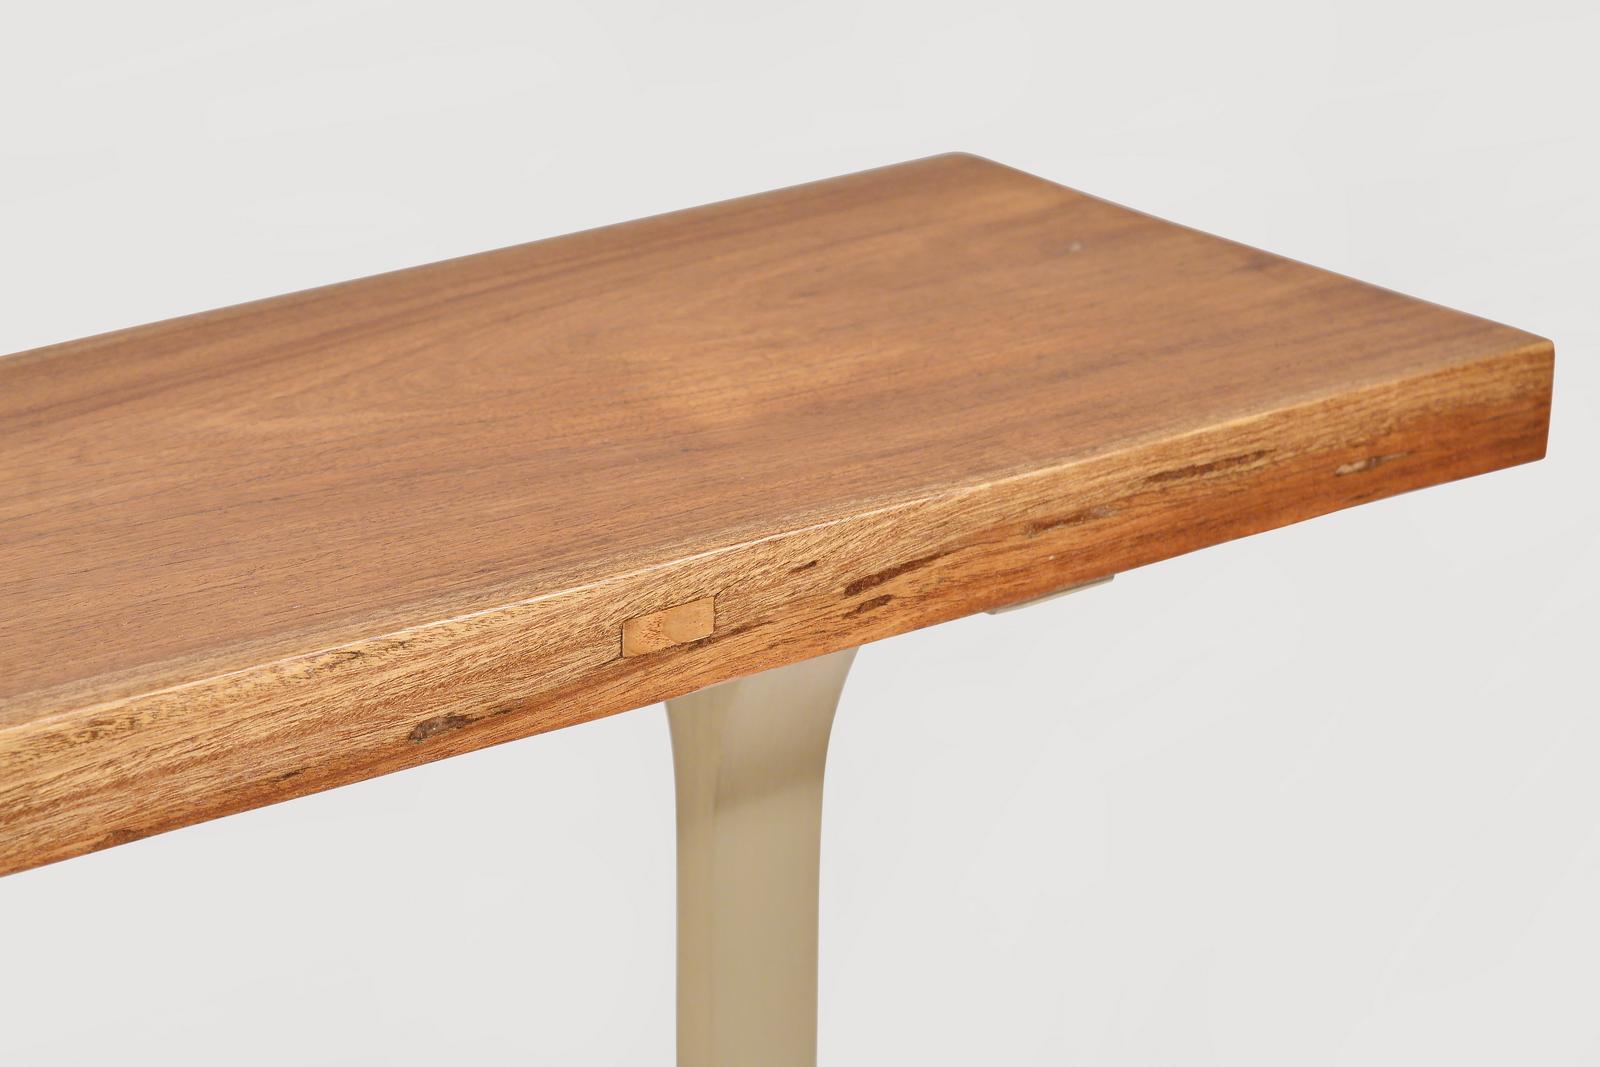 Thai Bespoke Side Table, Reclaimed Hardwood, Sand Cast Brass Base by P. Tendercool For Sale